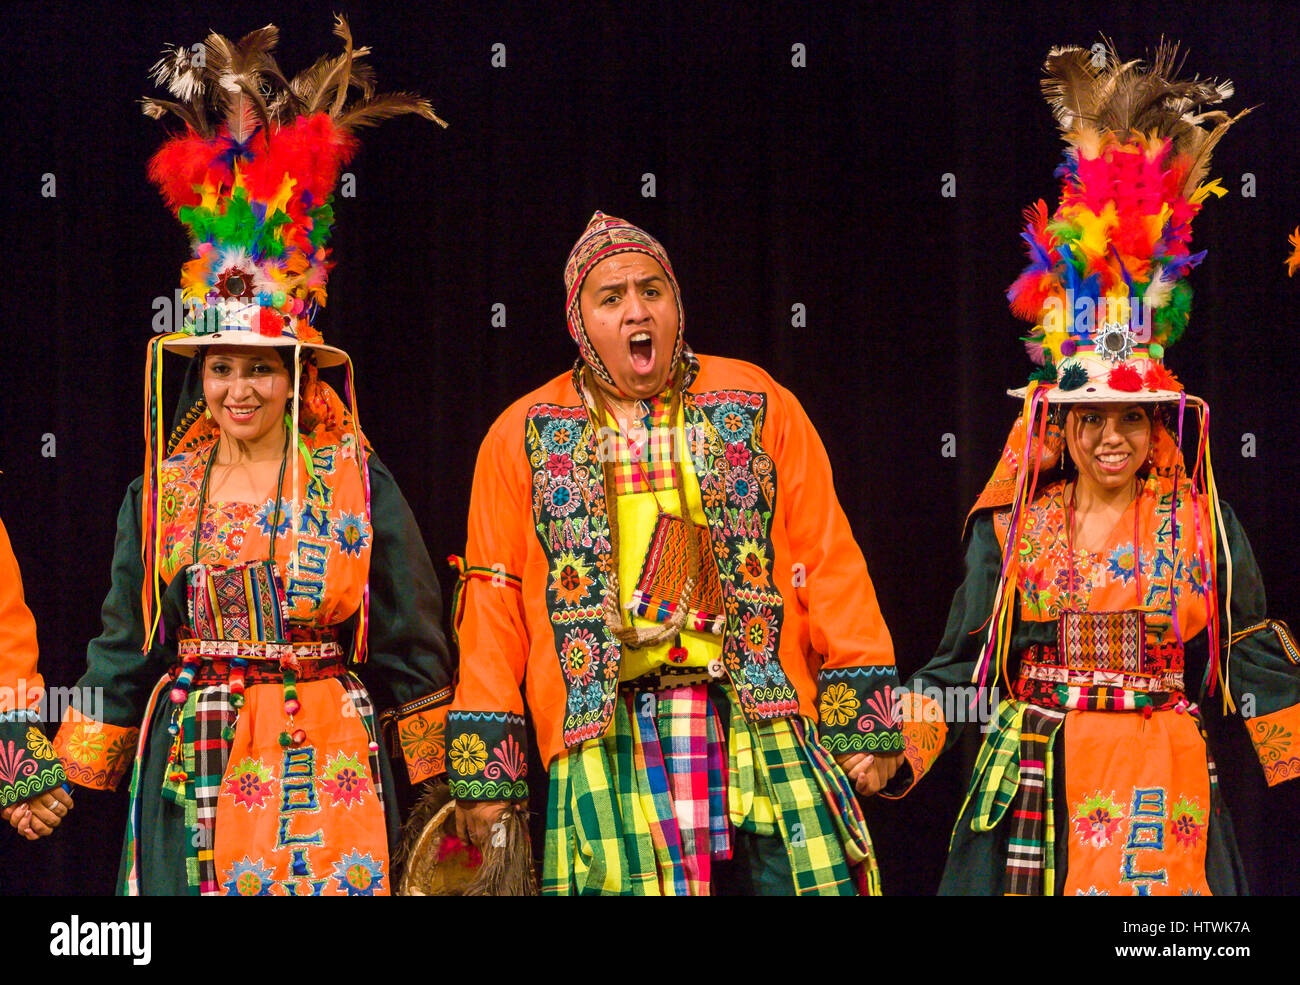 ARLINGTON, VIRGINIA, USA - Bolivian folk dancing group performs the Tinku dance during competition. Arlington has a large Bolivia immigrant community. Stock Photo